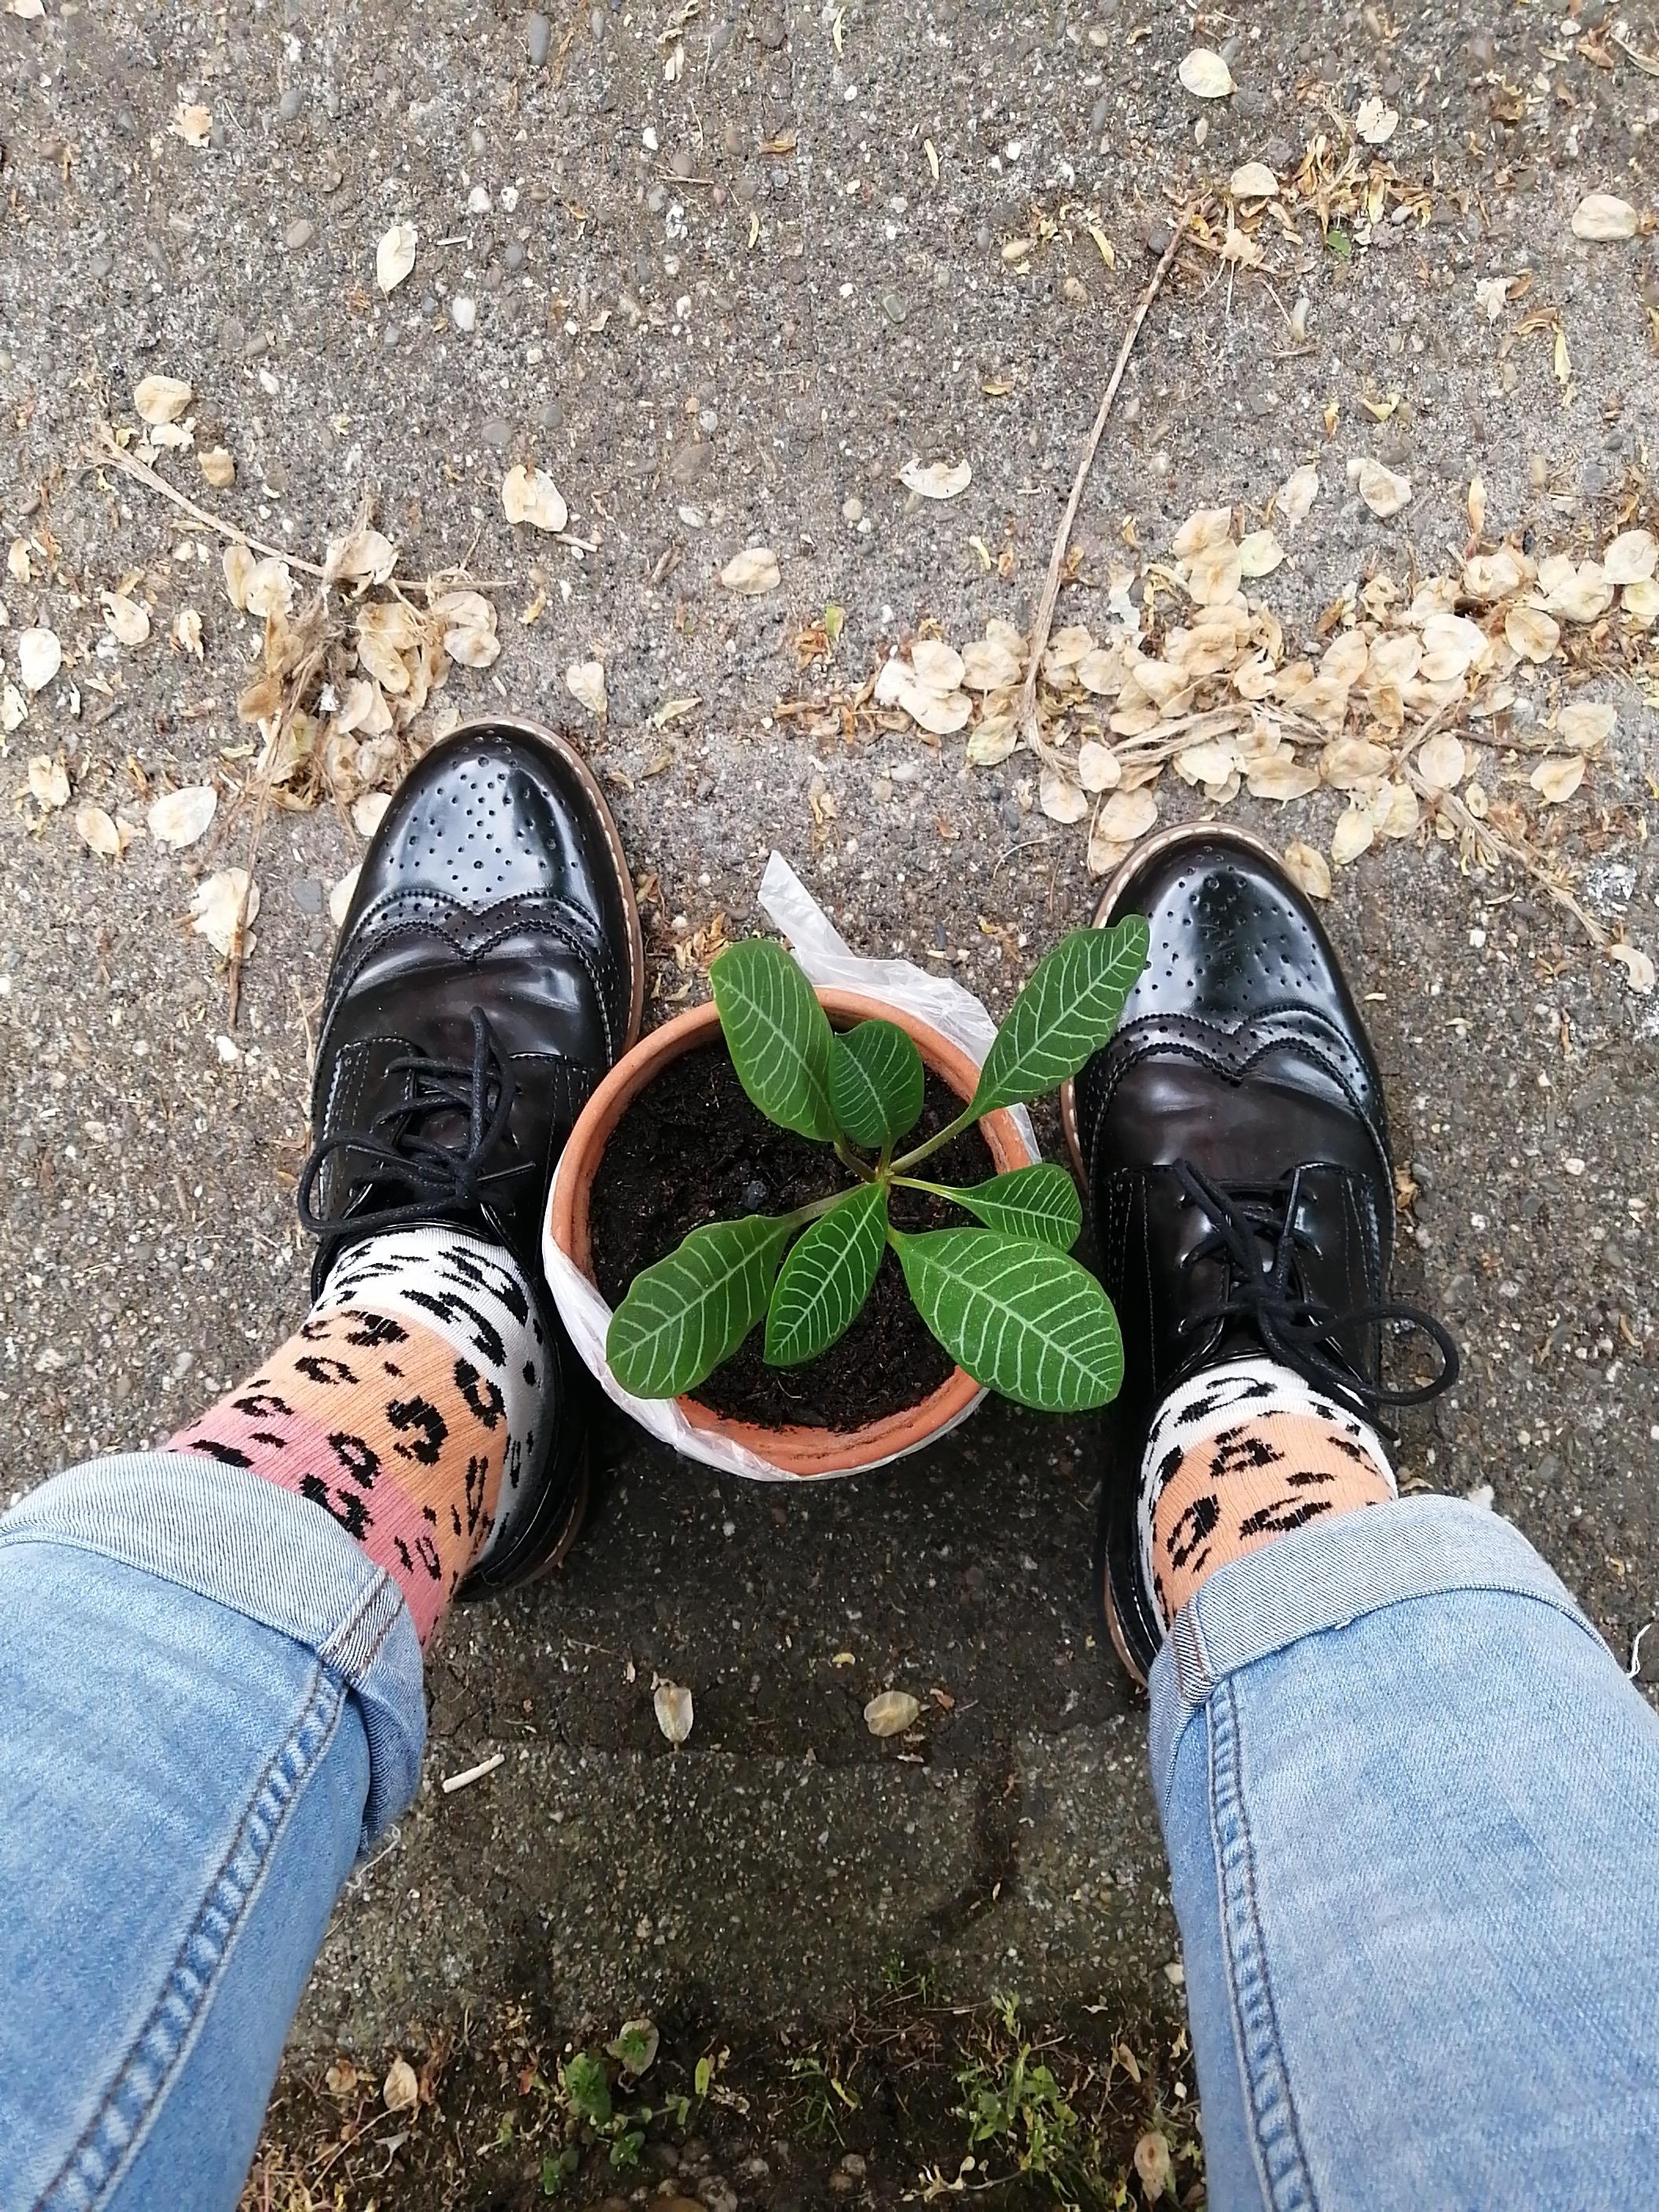 #pflanzenliebe
#socks
#budapester